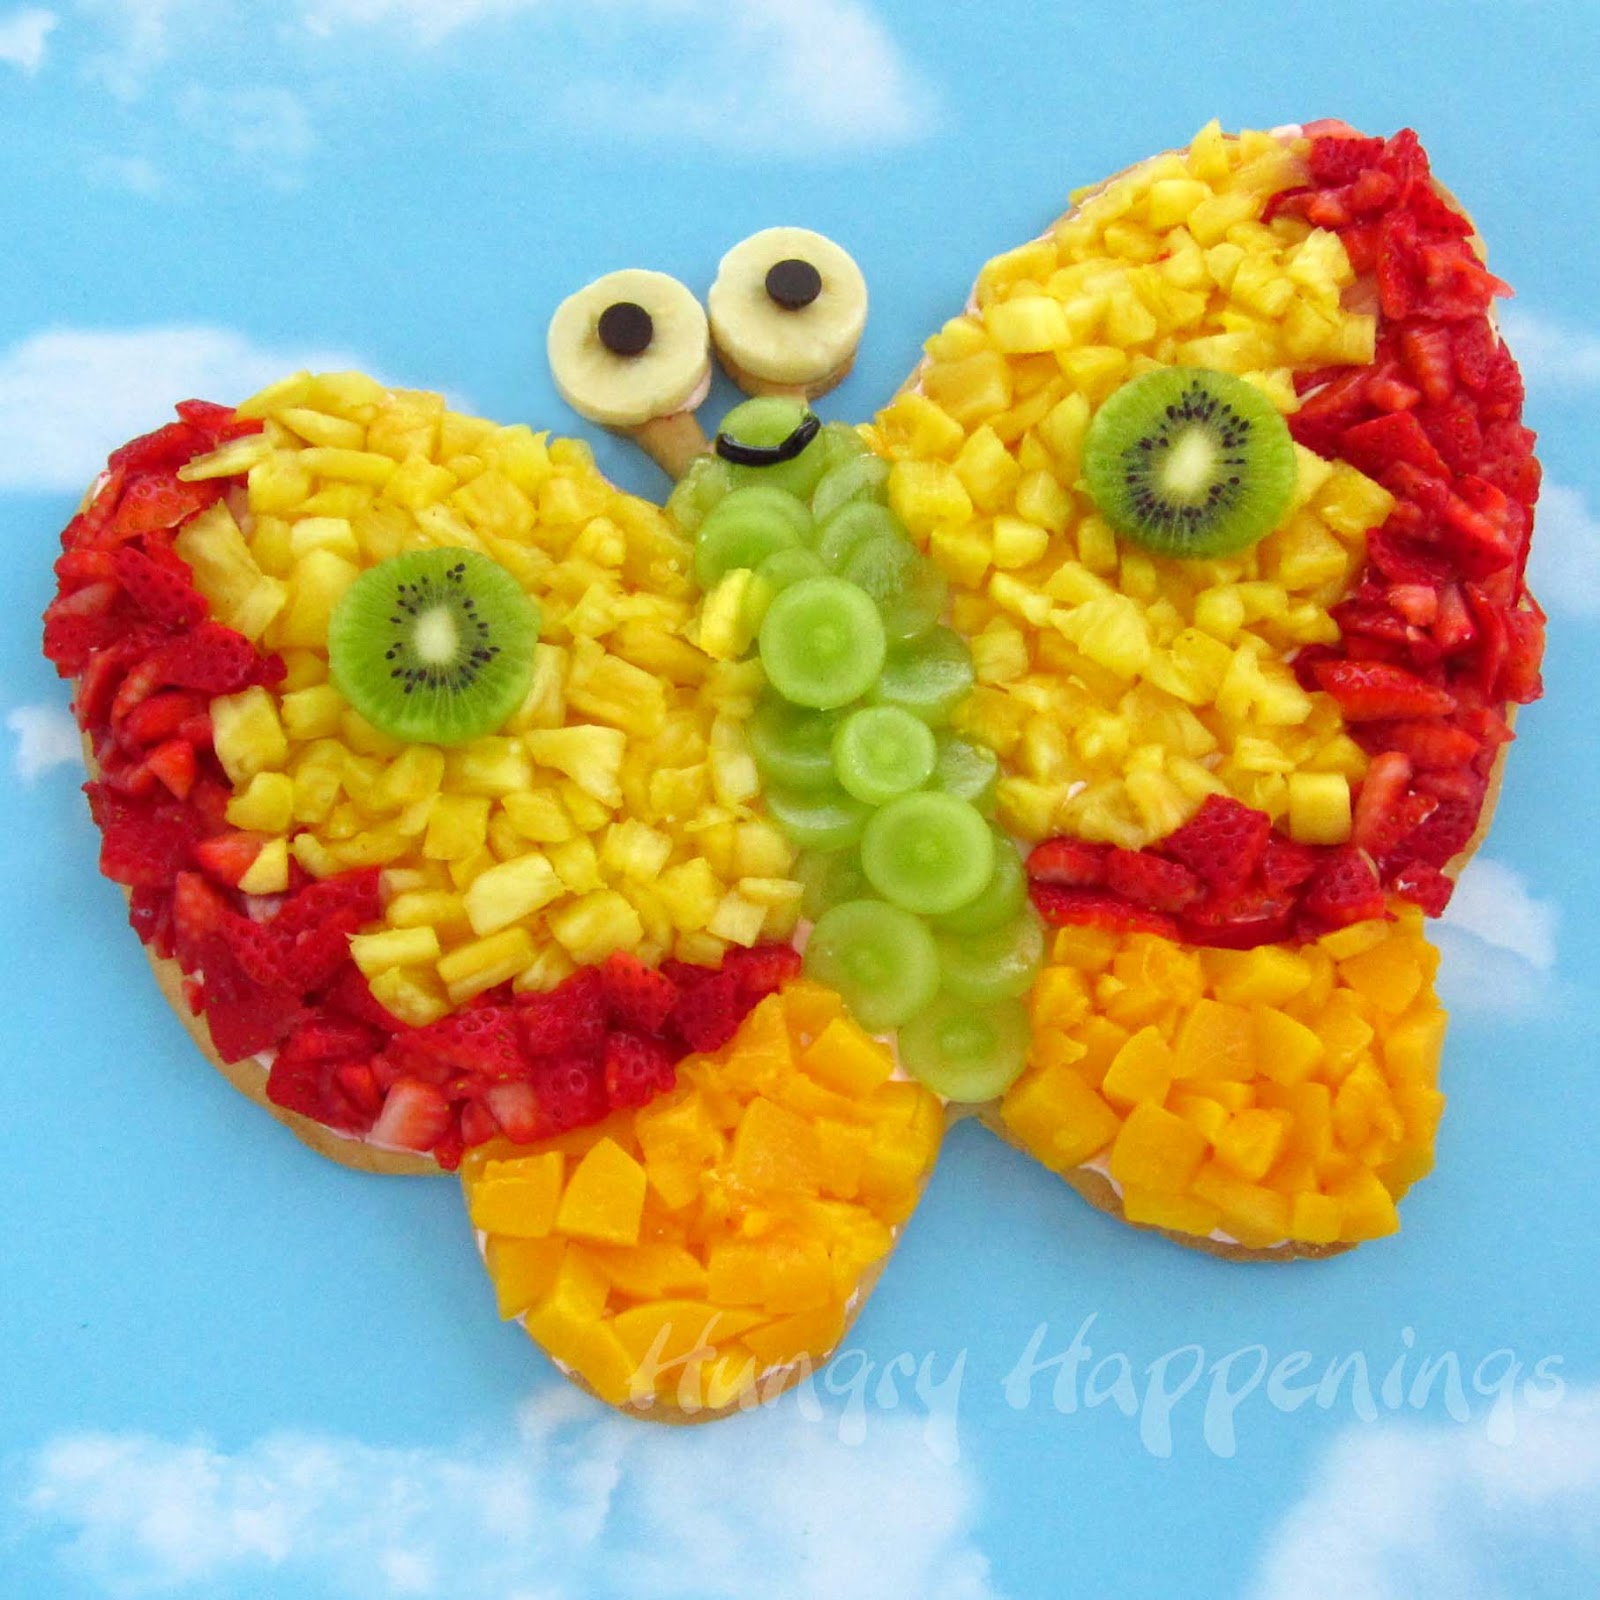 Butterfly+fruit+pizza+recipe,+edible+crafts,+summer+food,+kids+party+treat,+dessert+recipes+.jpg